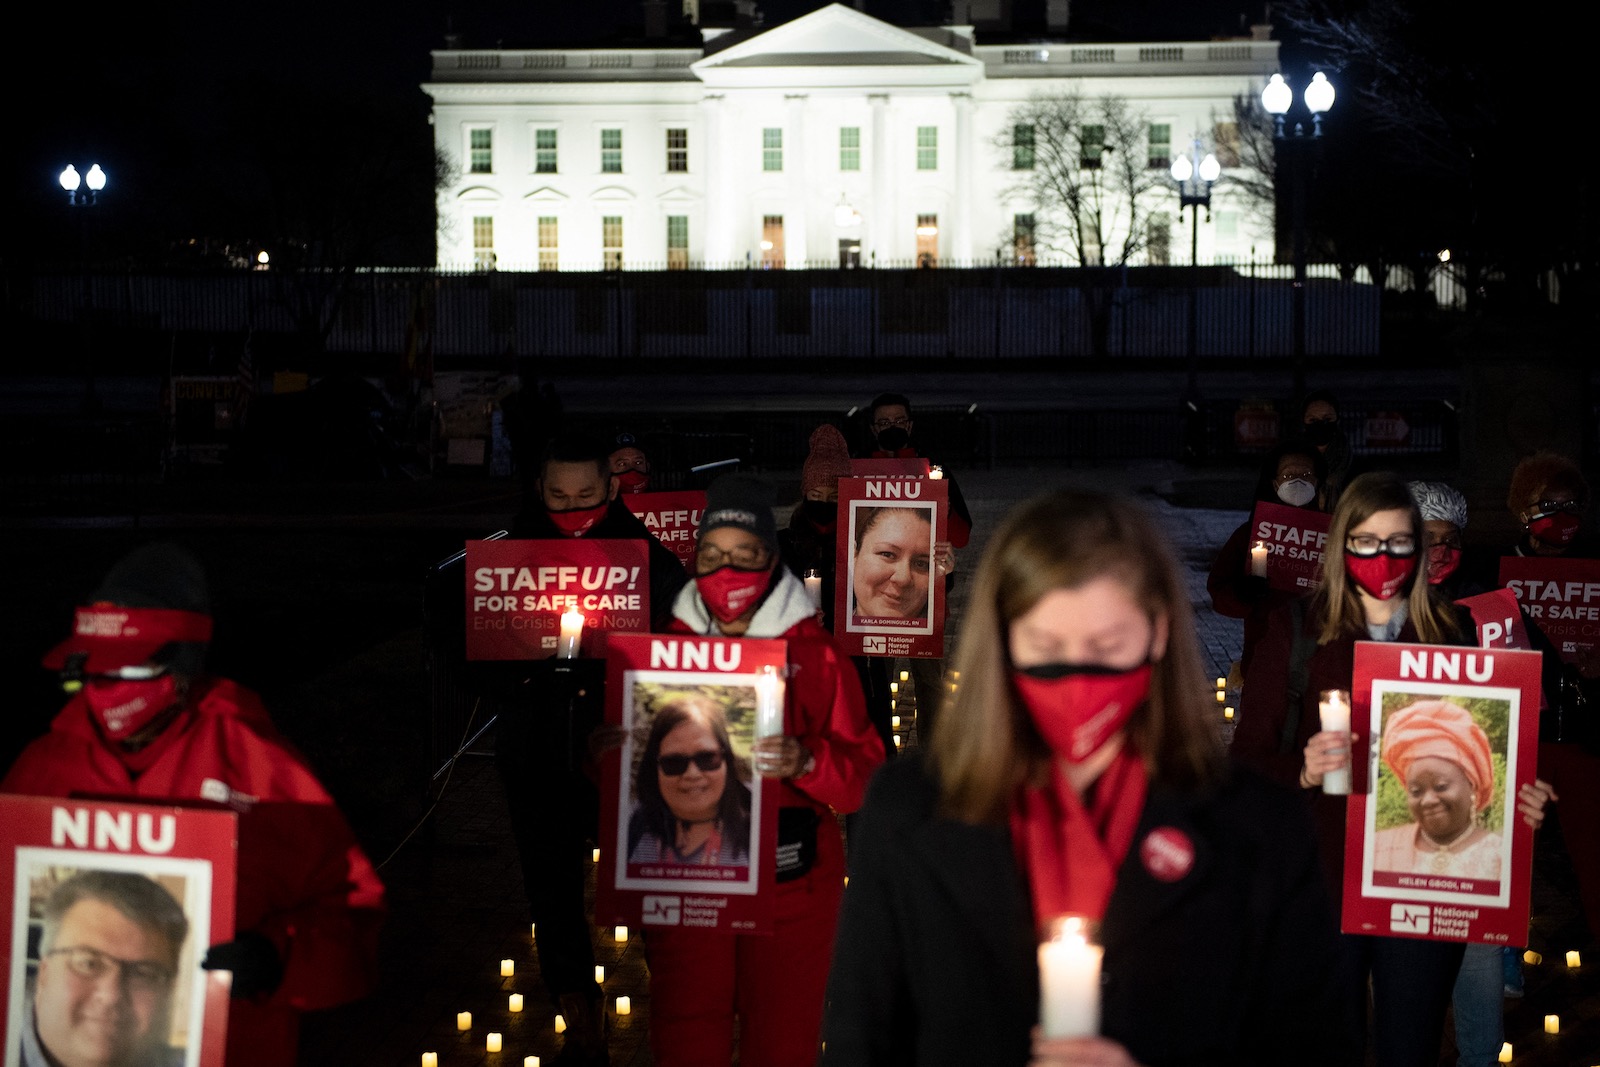 A vigil for nurses in D.C.